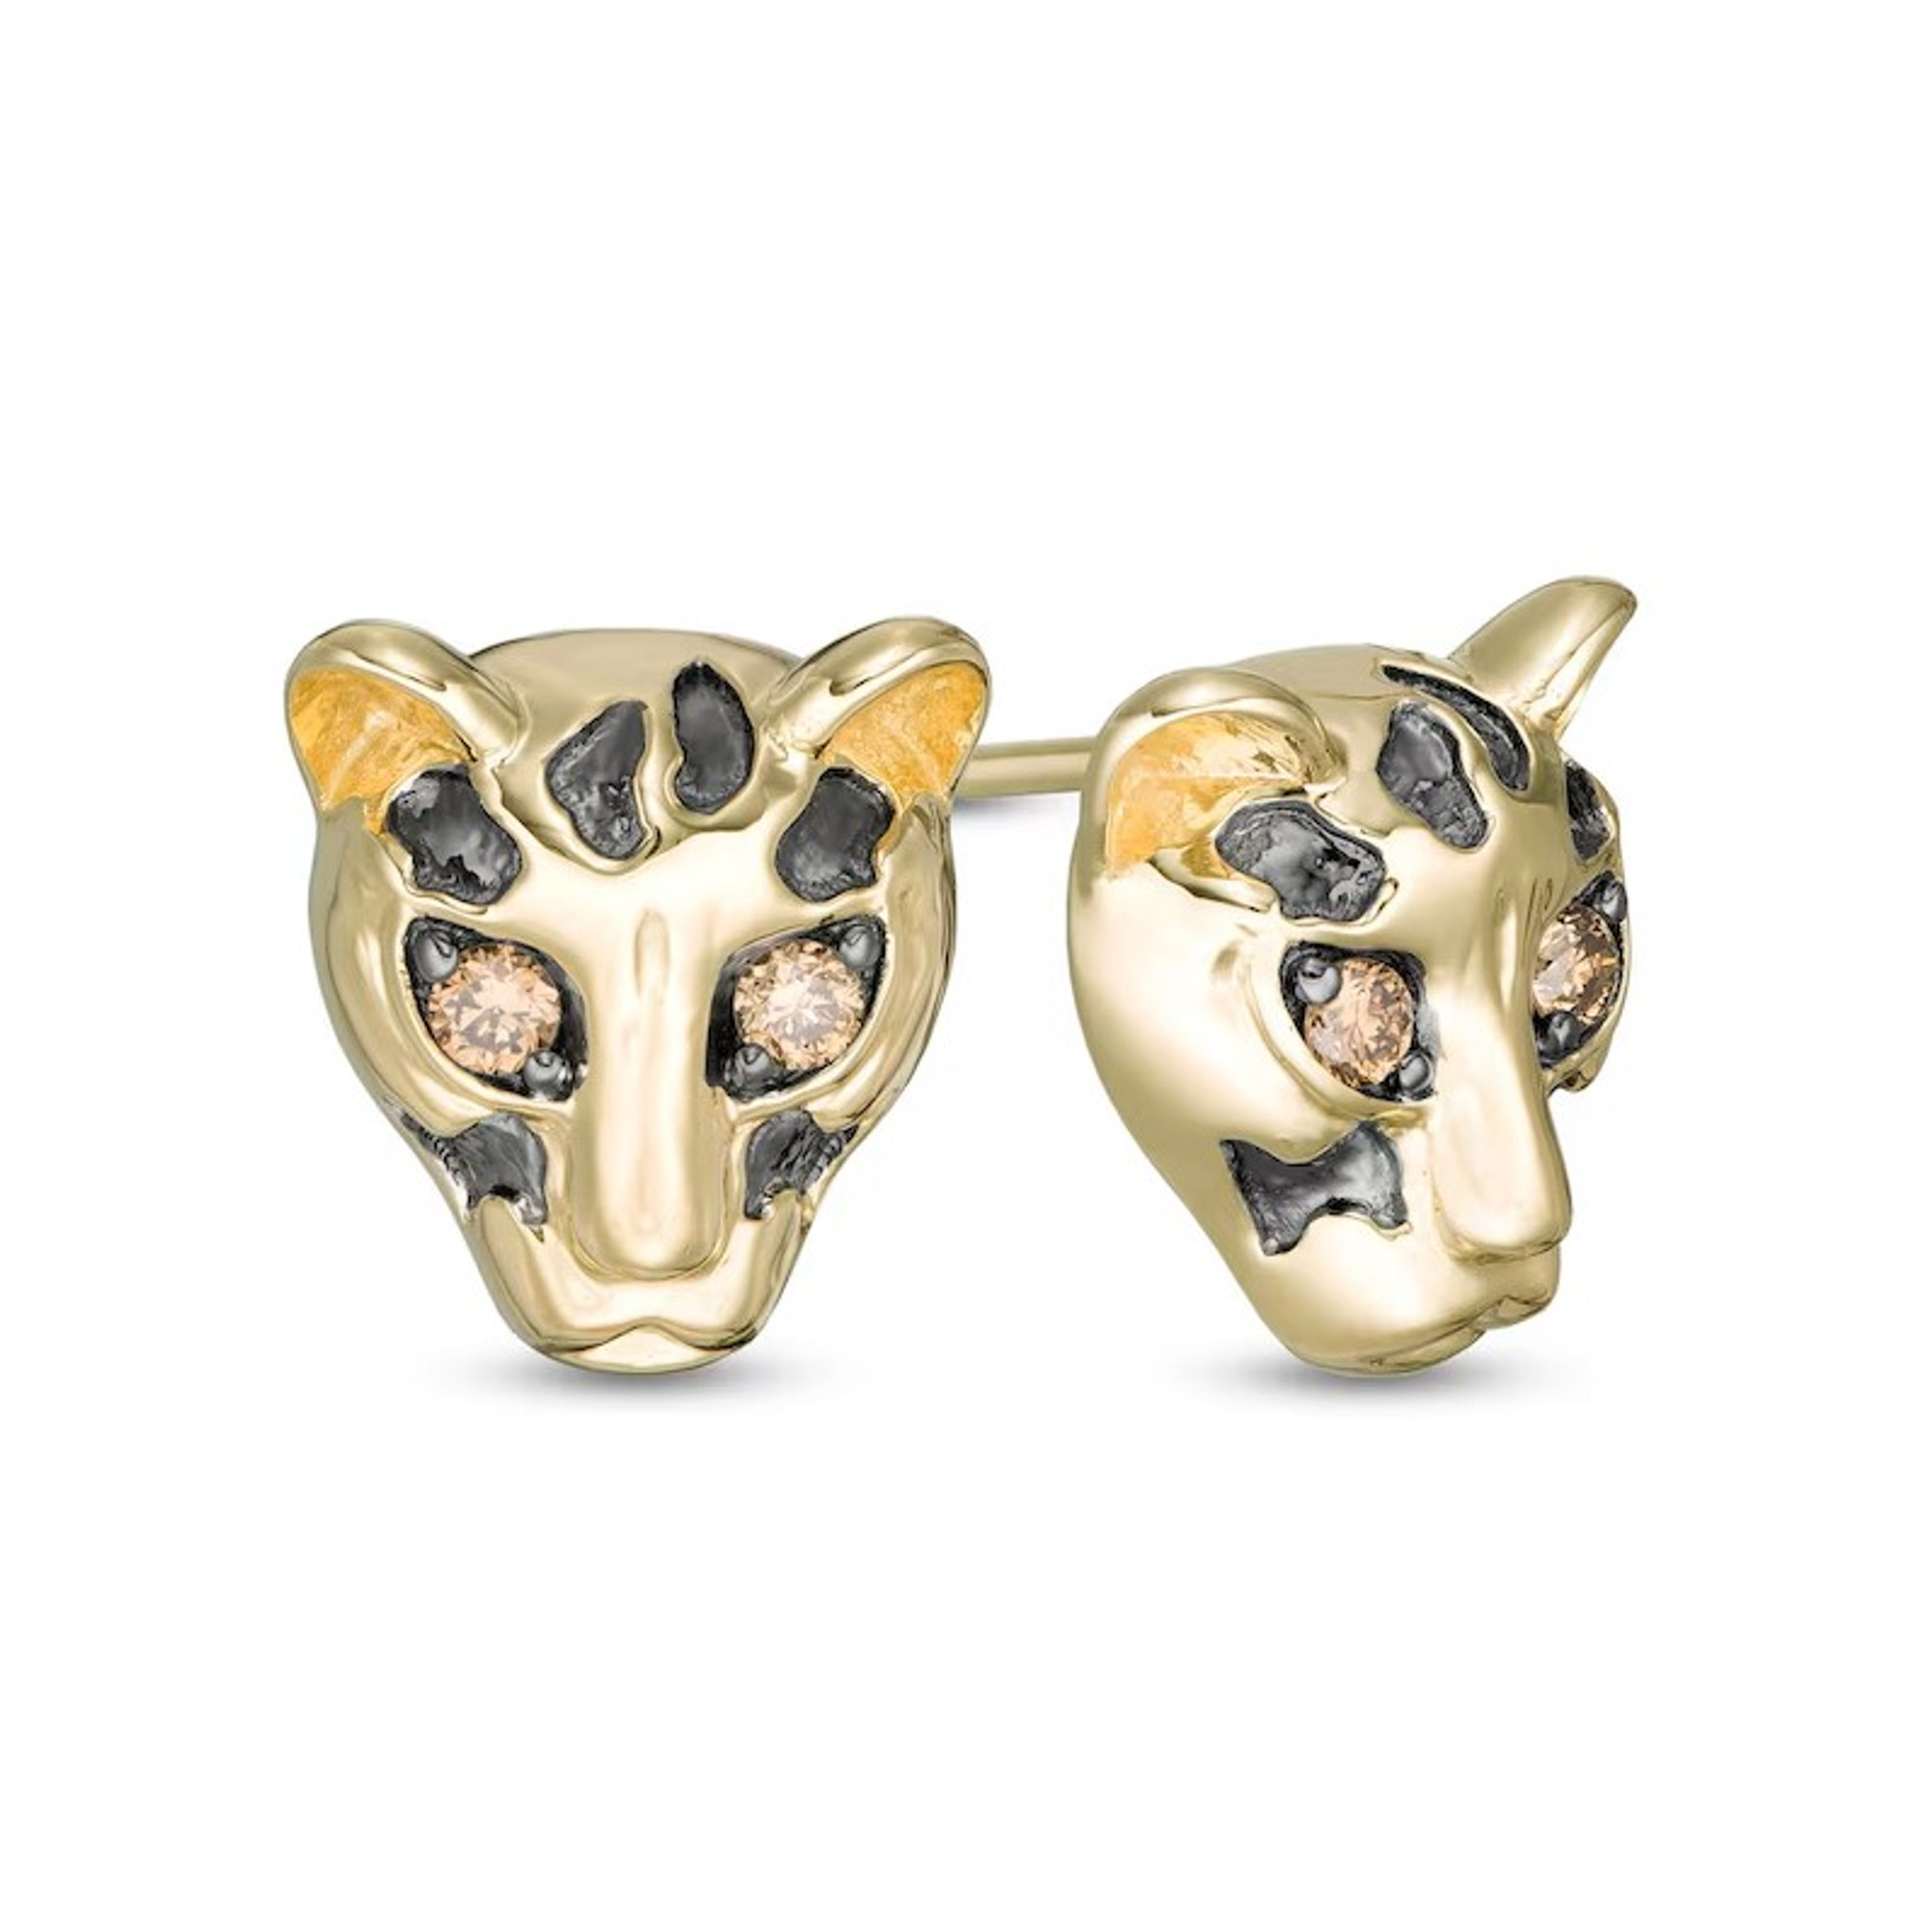 10K Yellow Gold & Black Rhodium Cheetah Earrings with Champagne Diamond Eyes